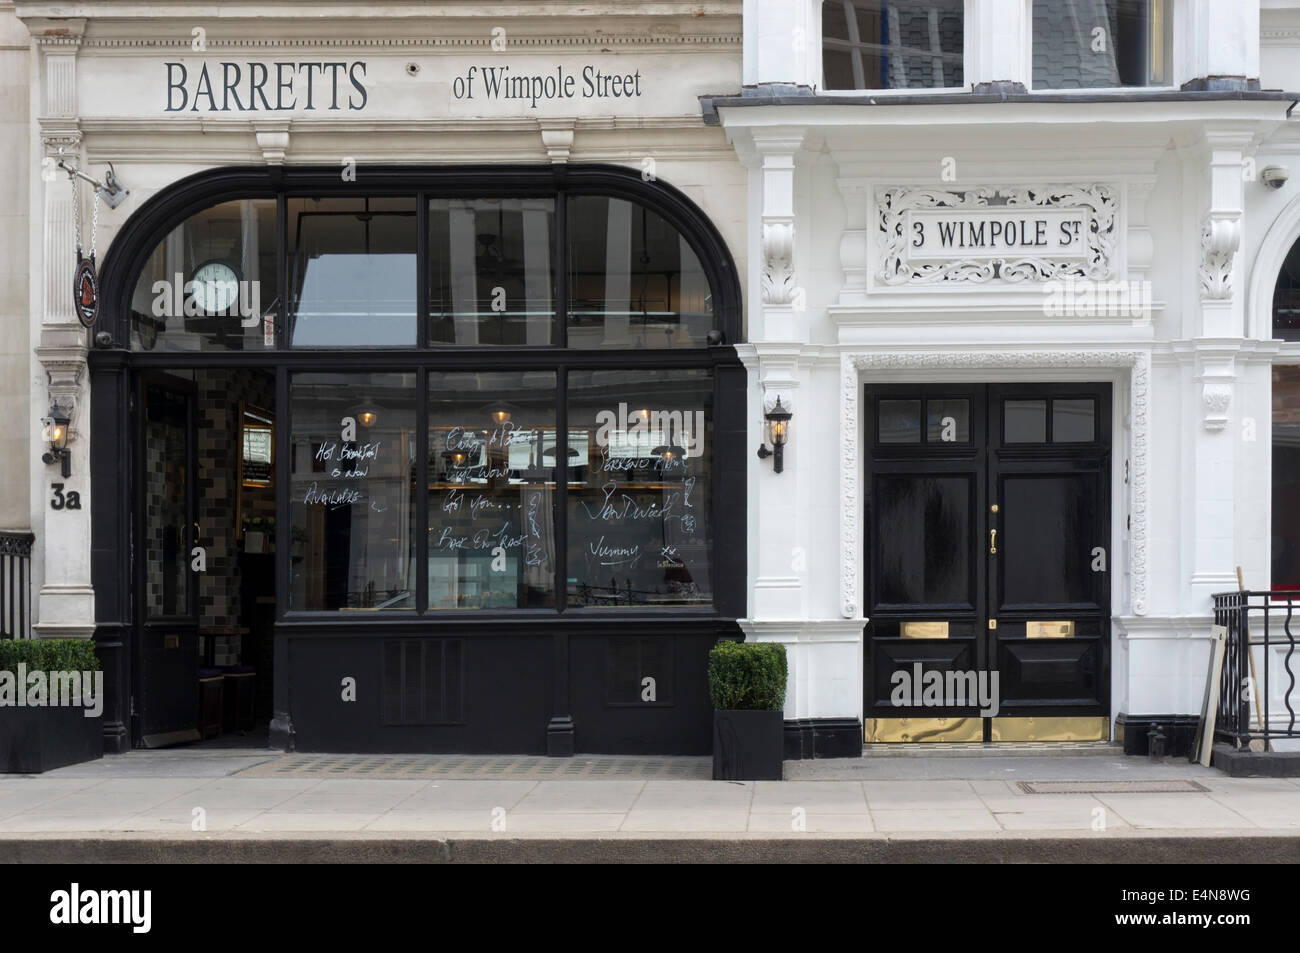 Barretts di Wimpole Street cafe. Foto Stock